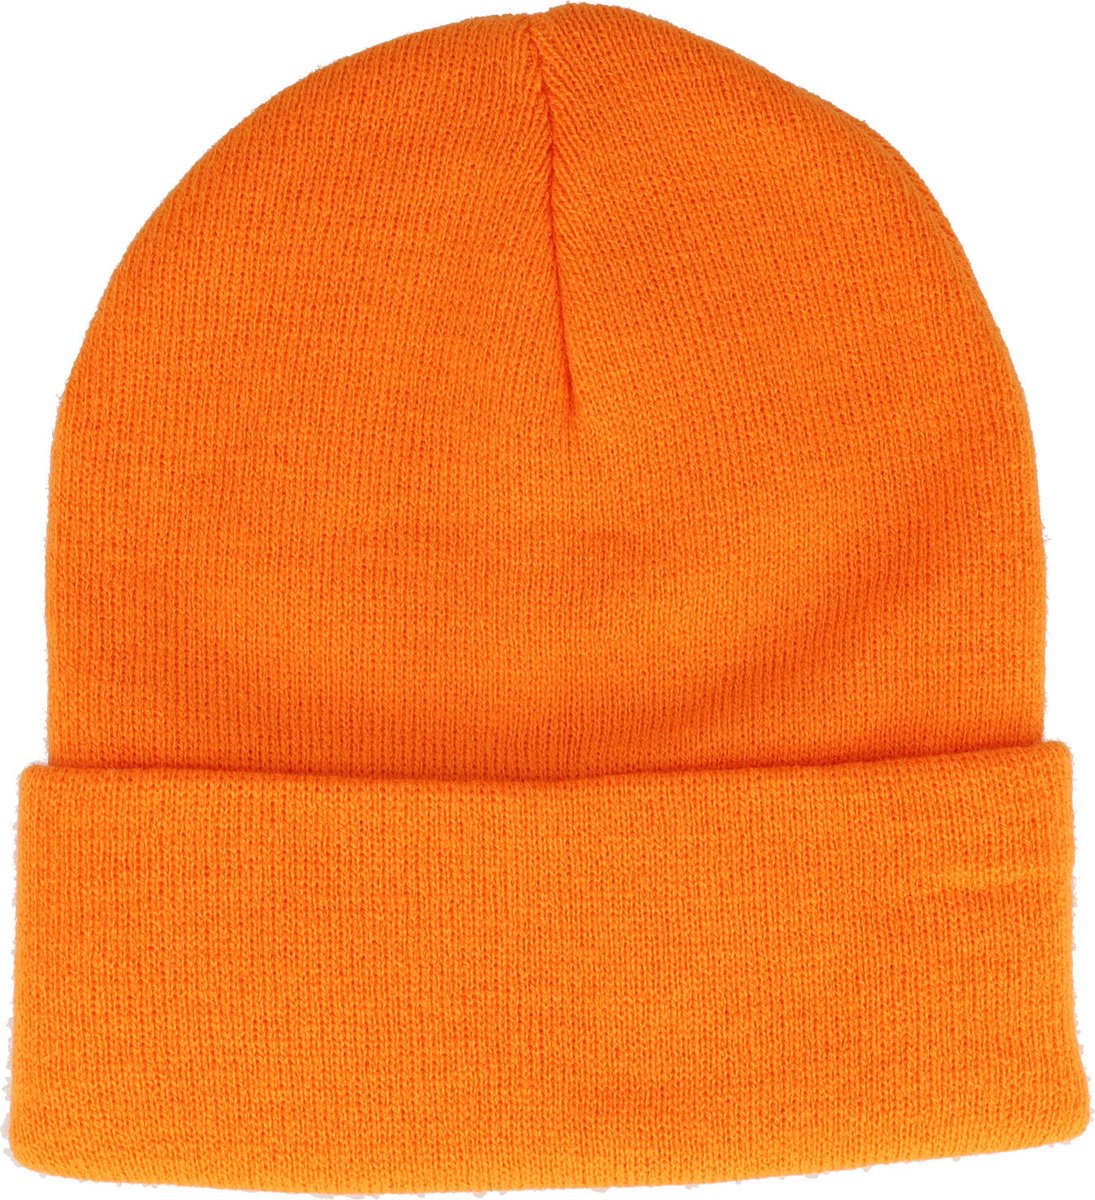 Beanie Muts Basic Oranje One Size Unisex Winter Warm Hoofddeksel Dames Heren Kinderen